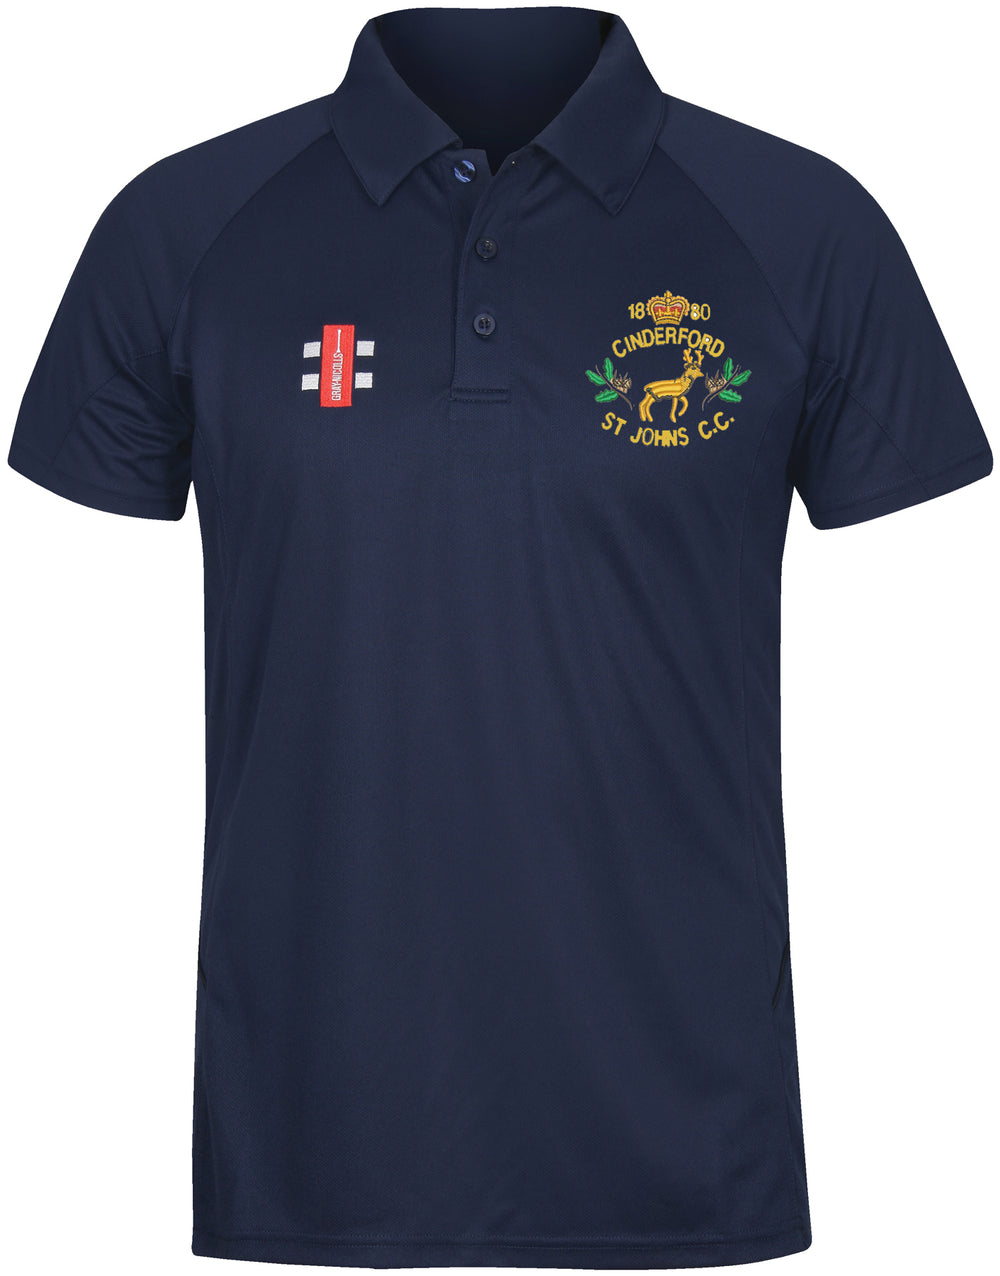 Cinderford St Johns CC Matrix Polo Shirt